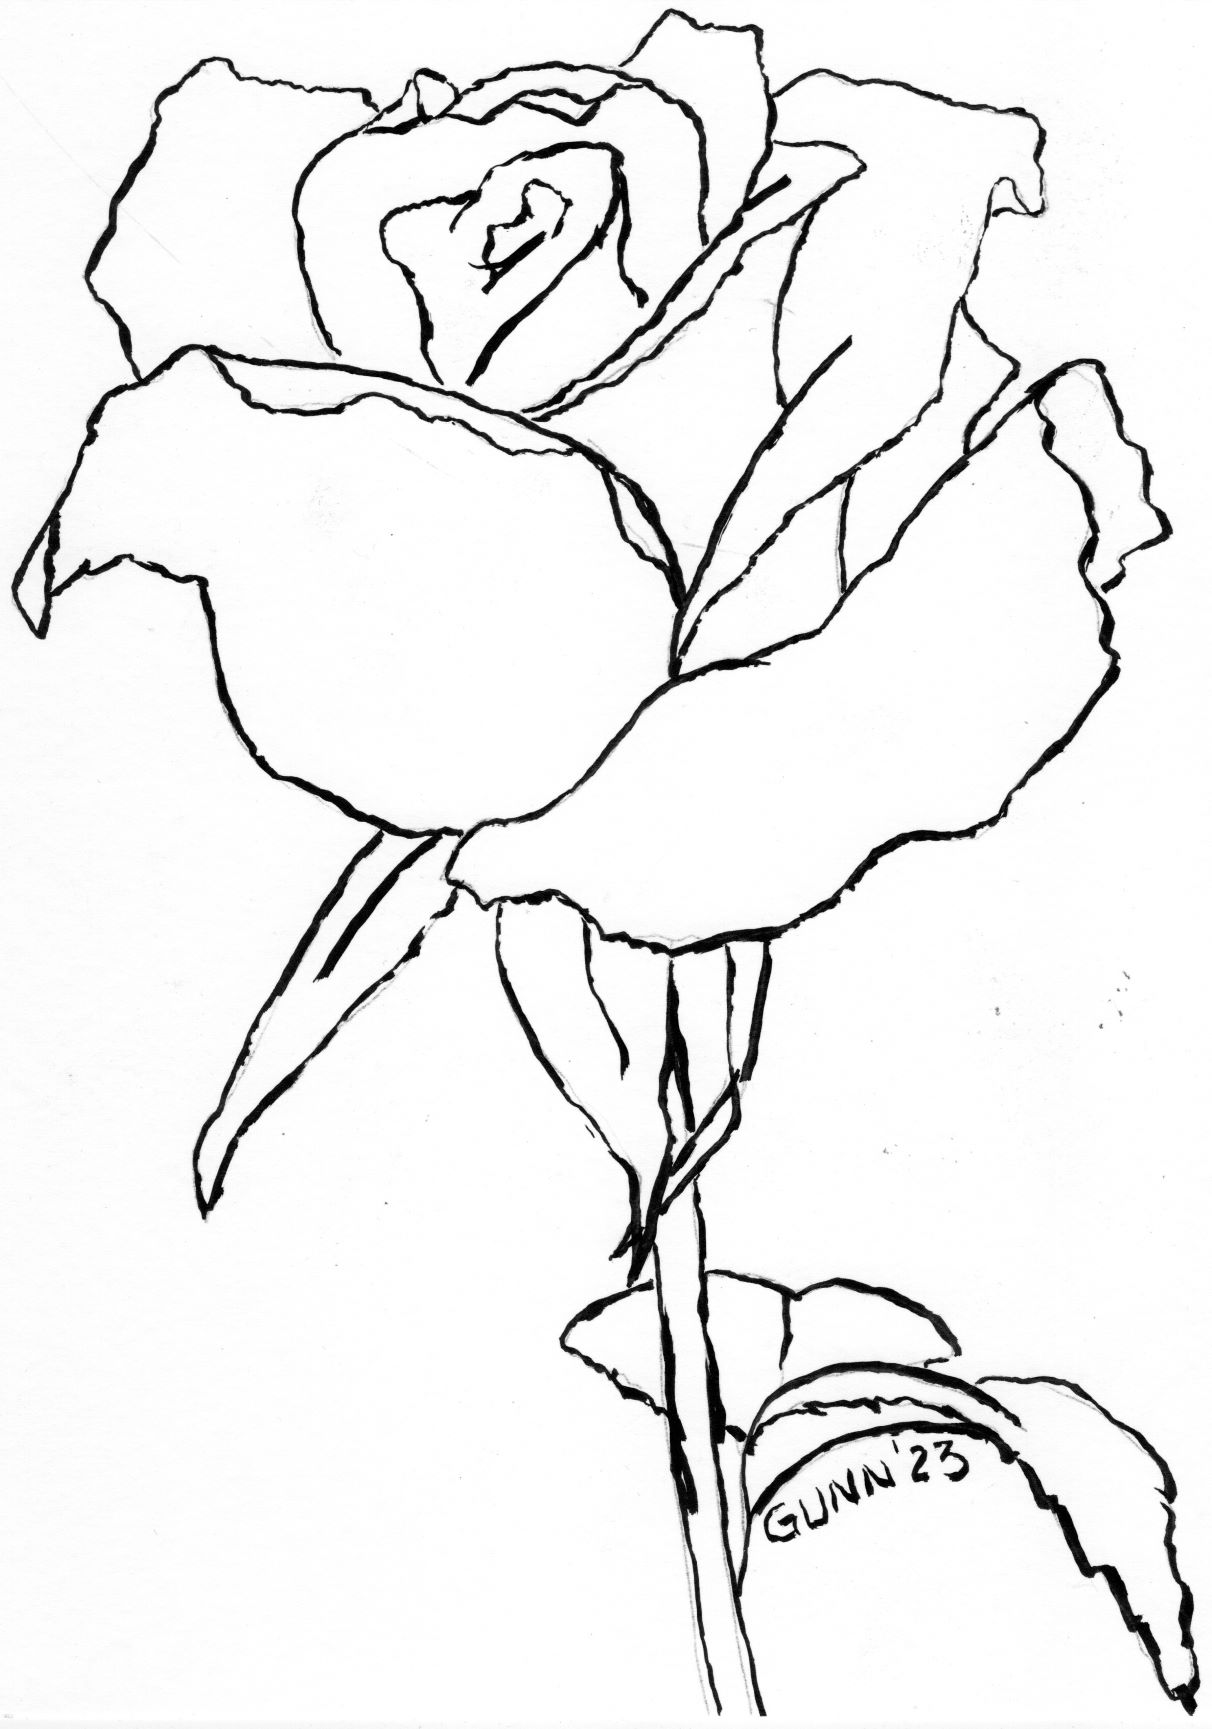 Rose image line art tattoo Royalty Free Vector Image